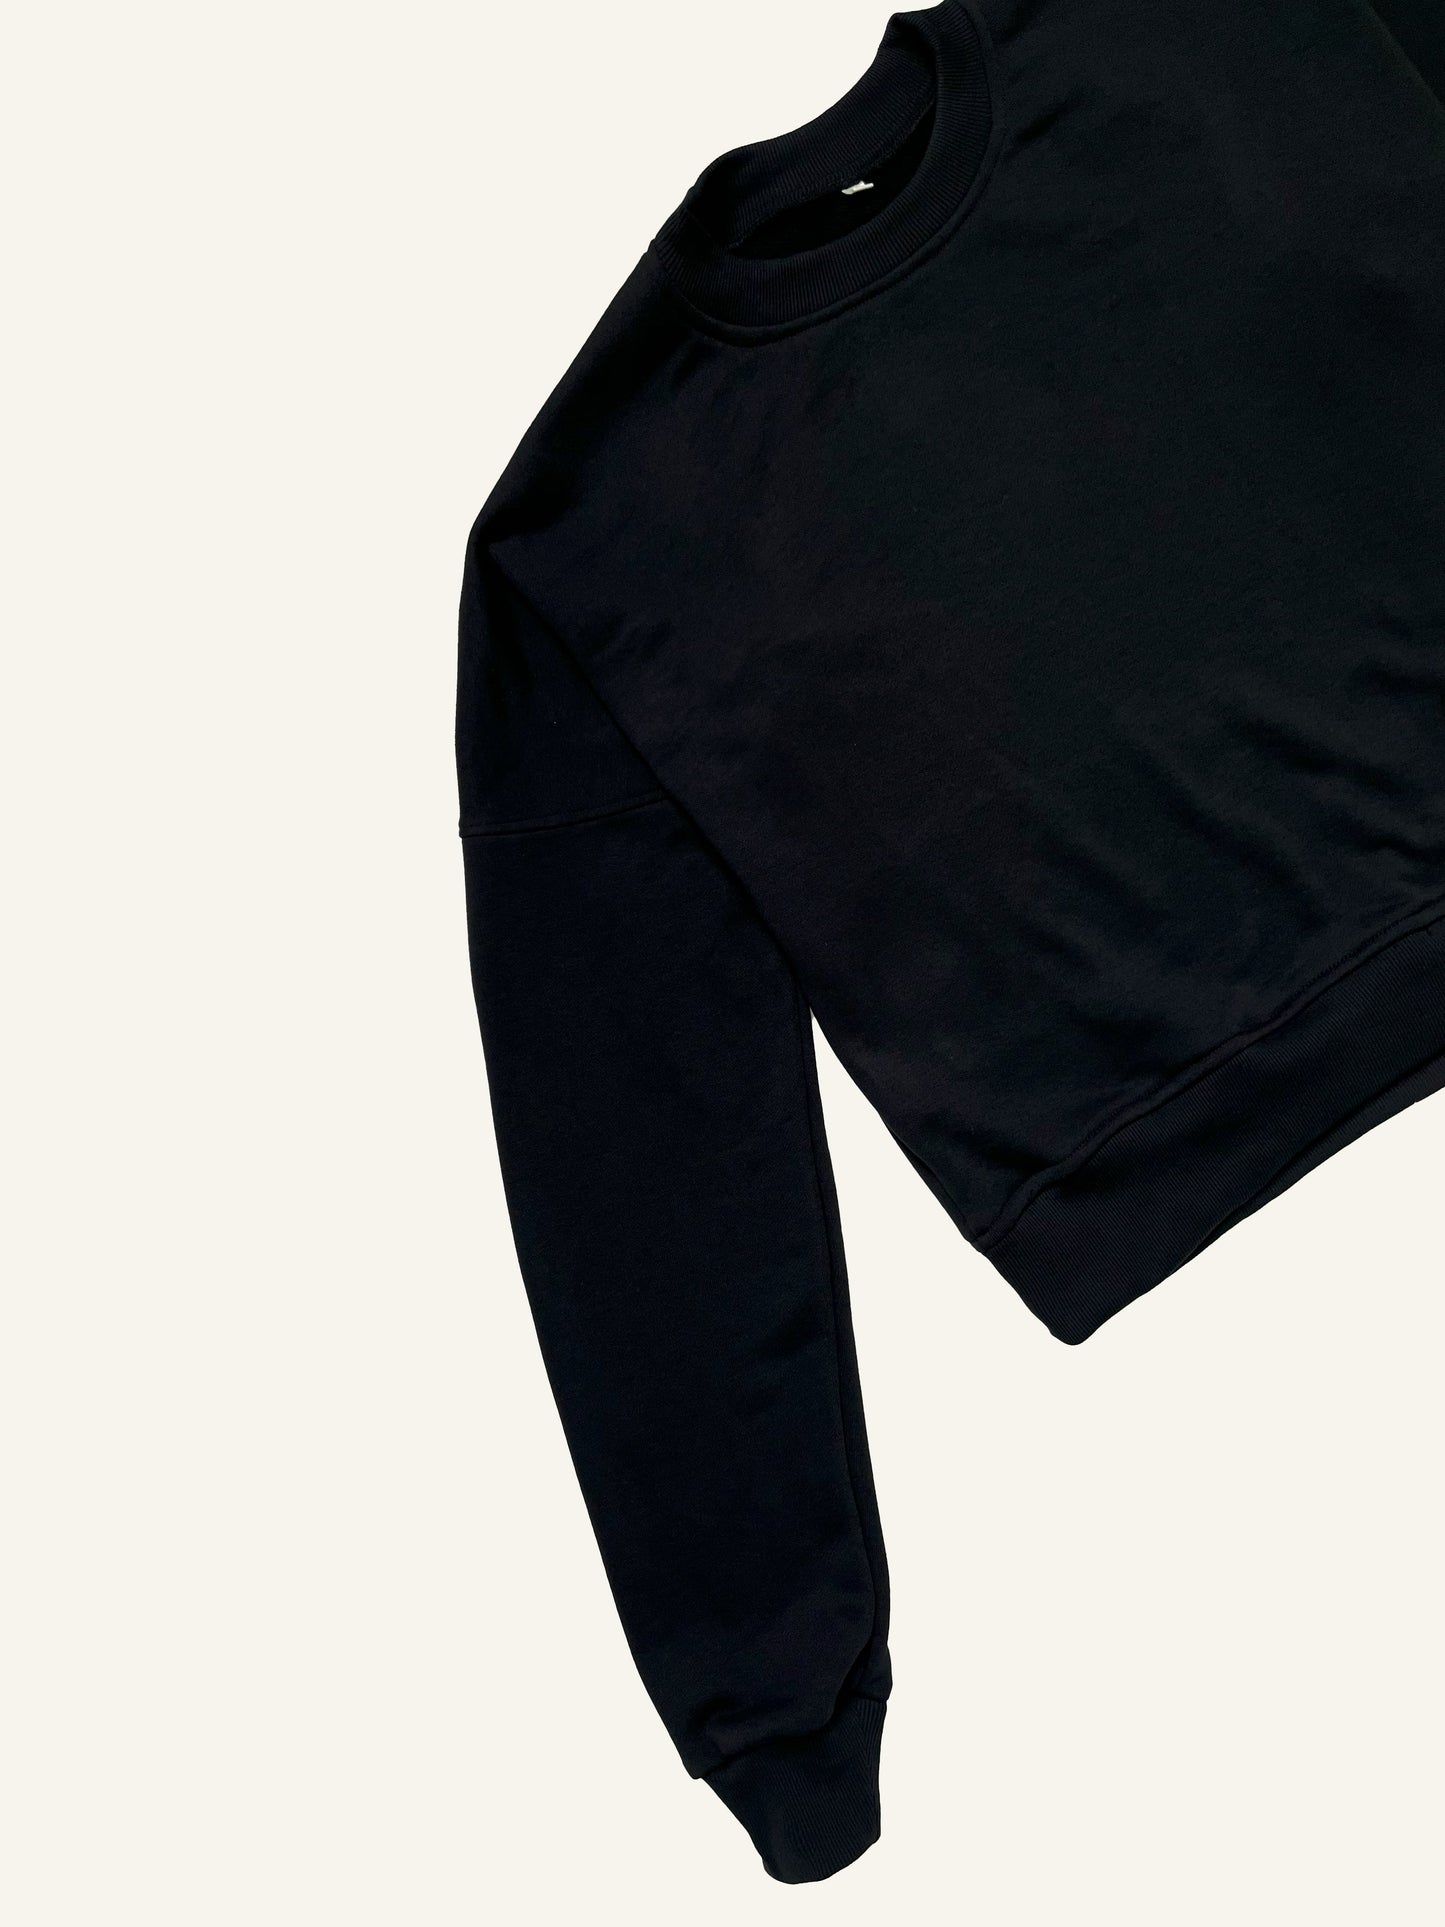 Cyon™ Fit Sweatshirt (Basics)